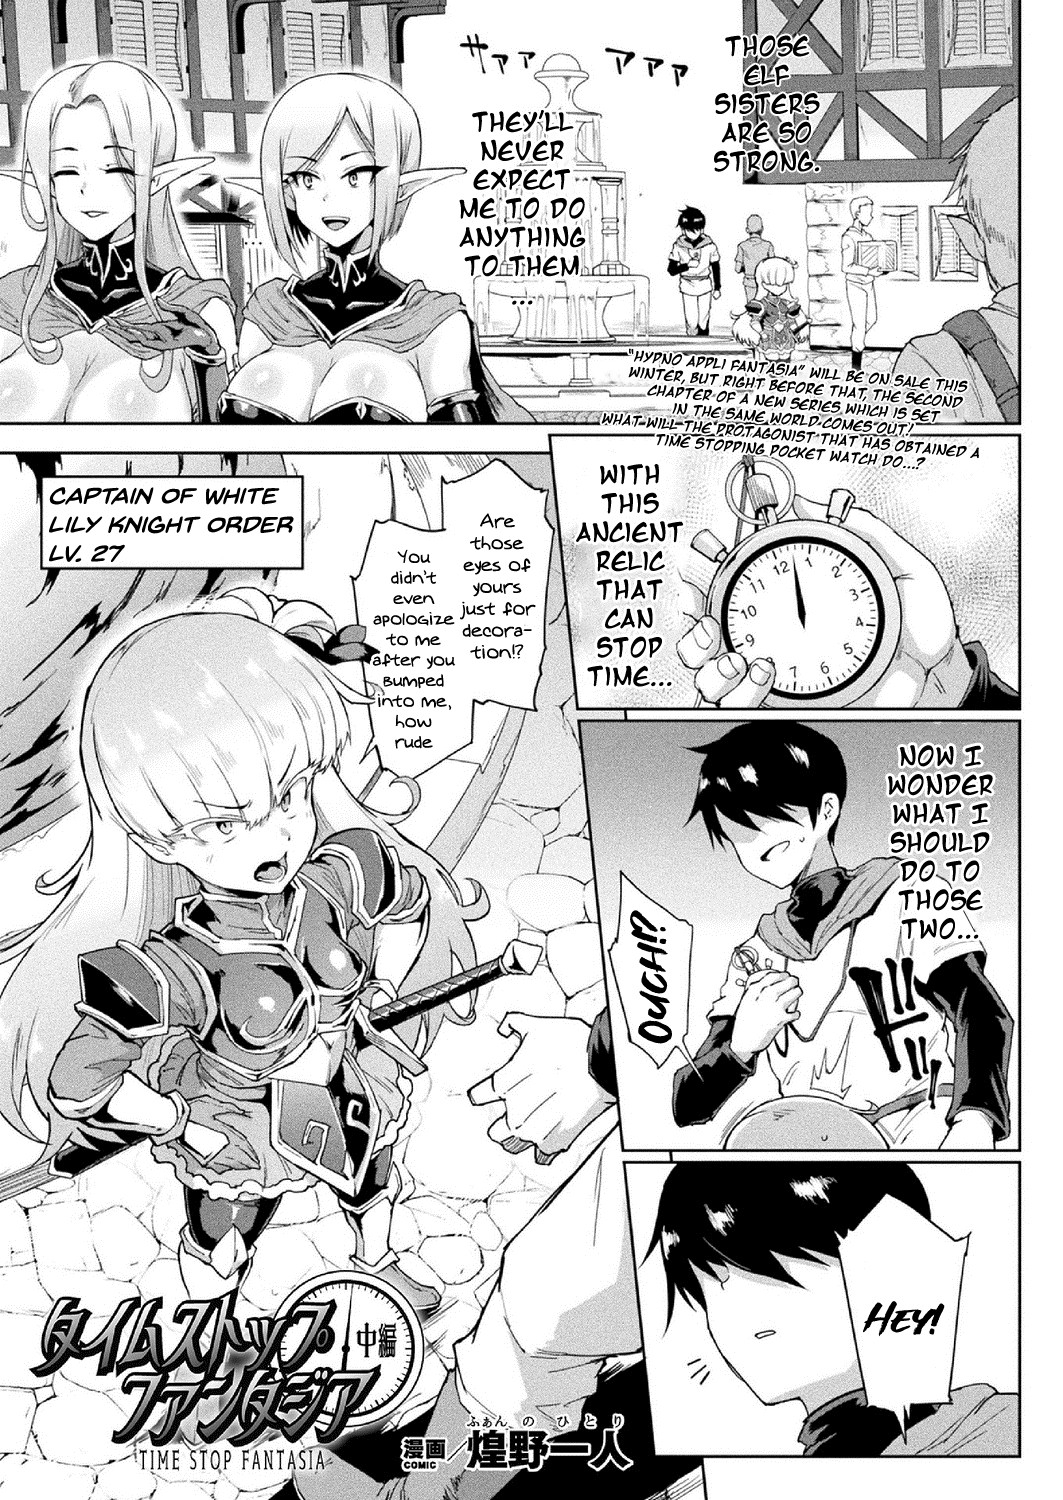 Hentai Manga Comic-Time Stop Fantasia - Middle Part-Read-1